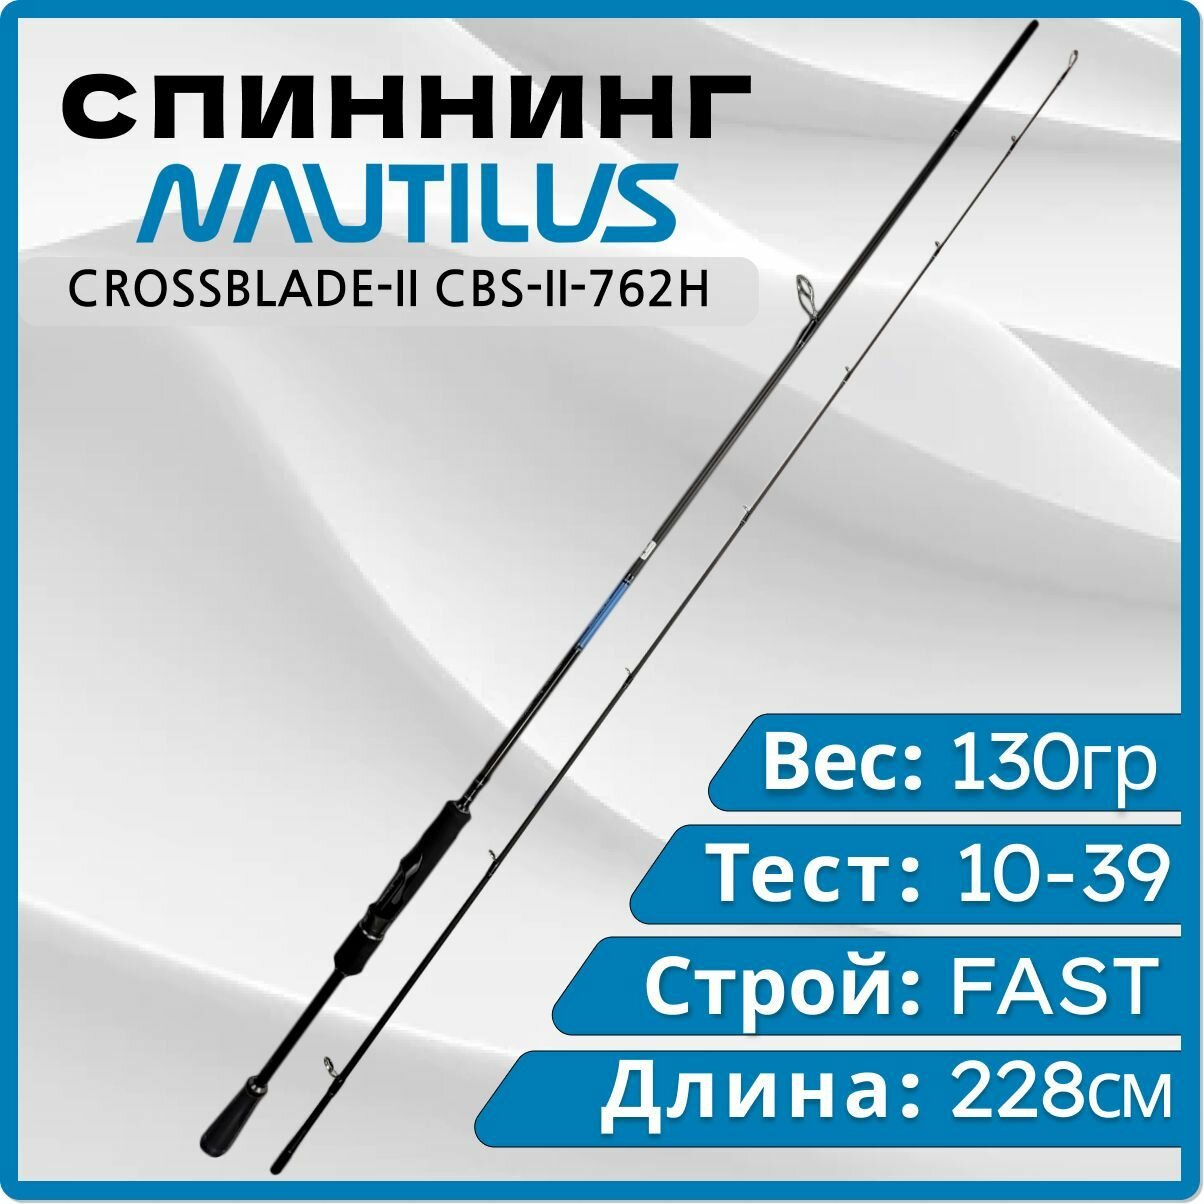 Спиннинг Nautilus CROSSBLADE-II CBS-II-762H 2.28м 10-39гр